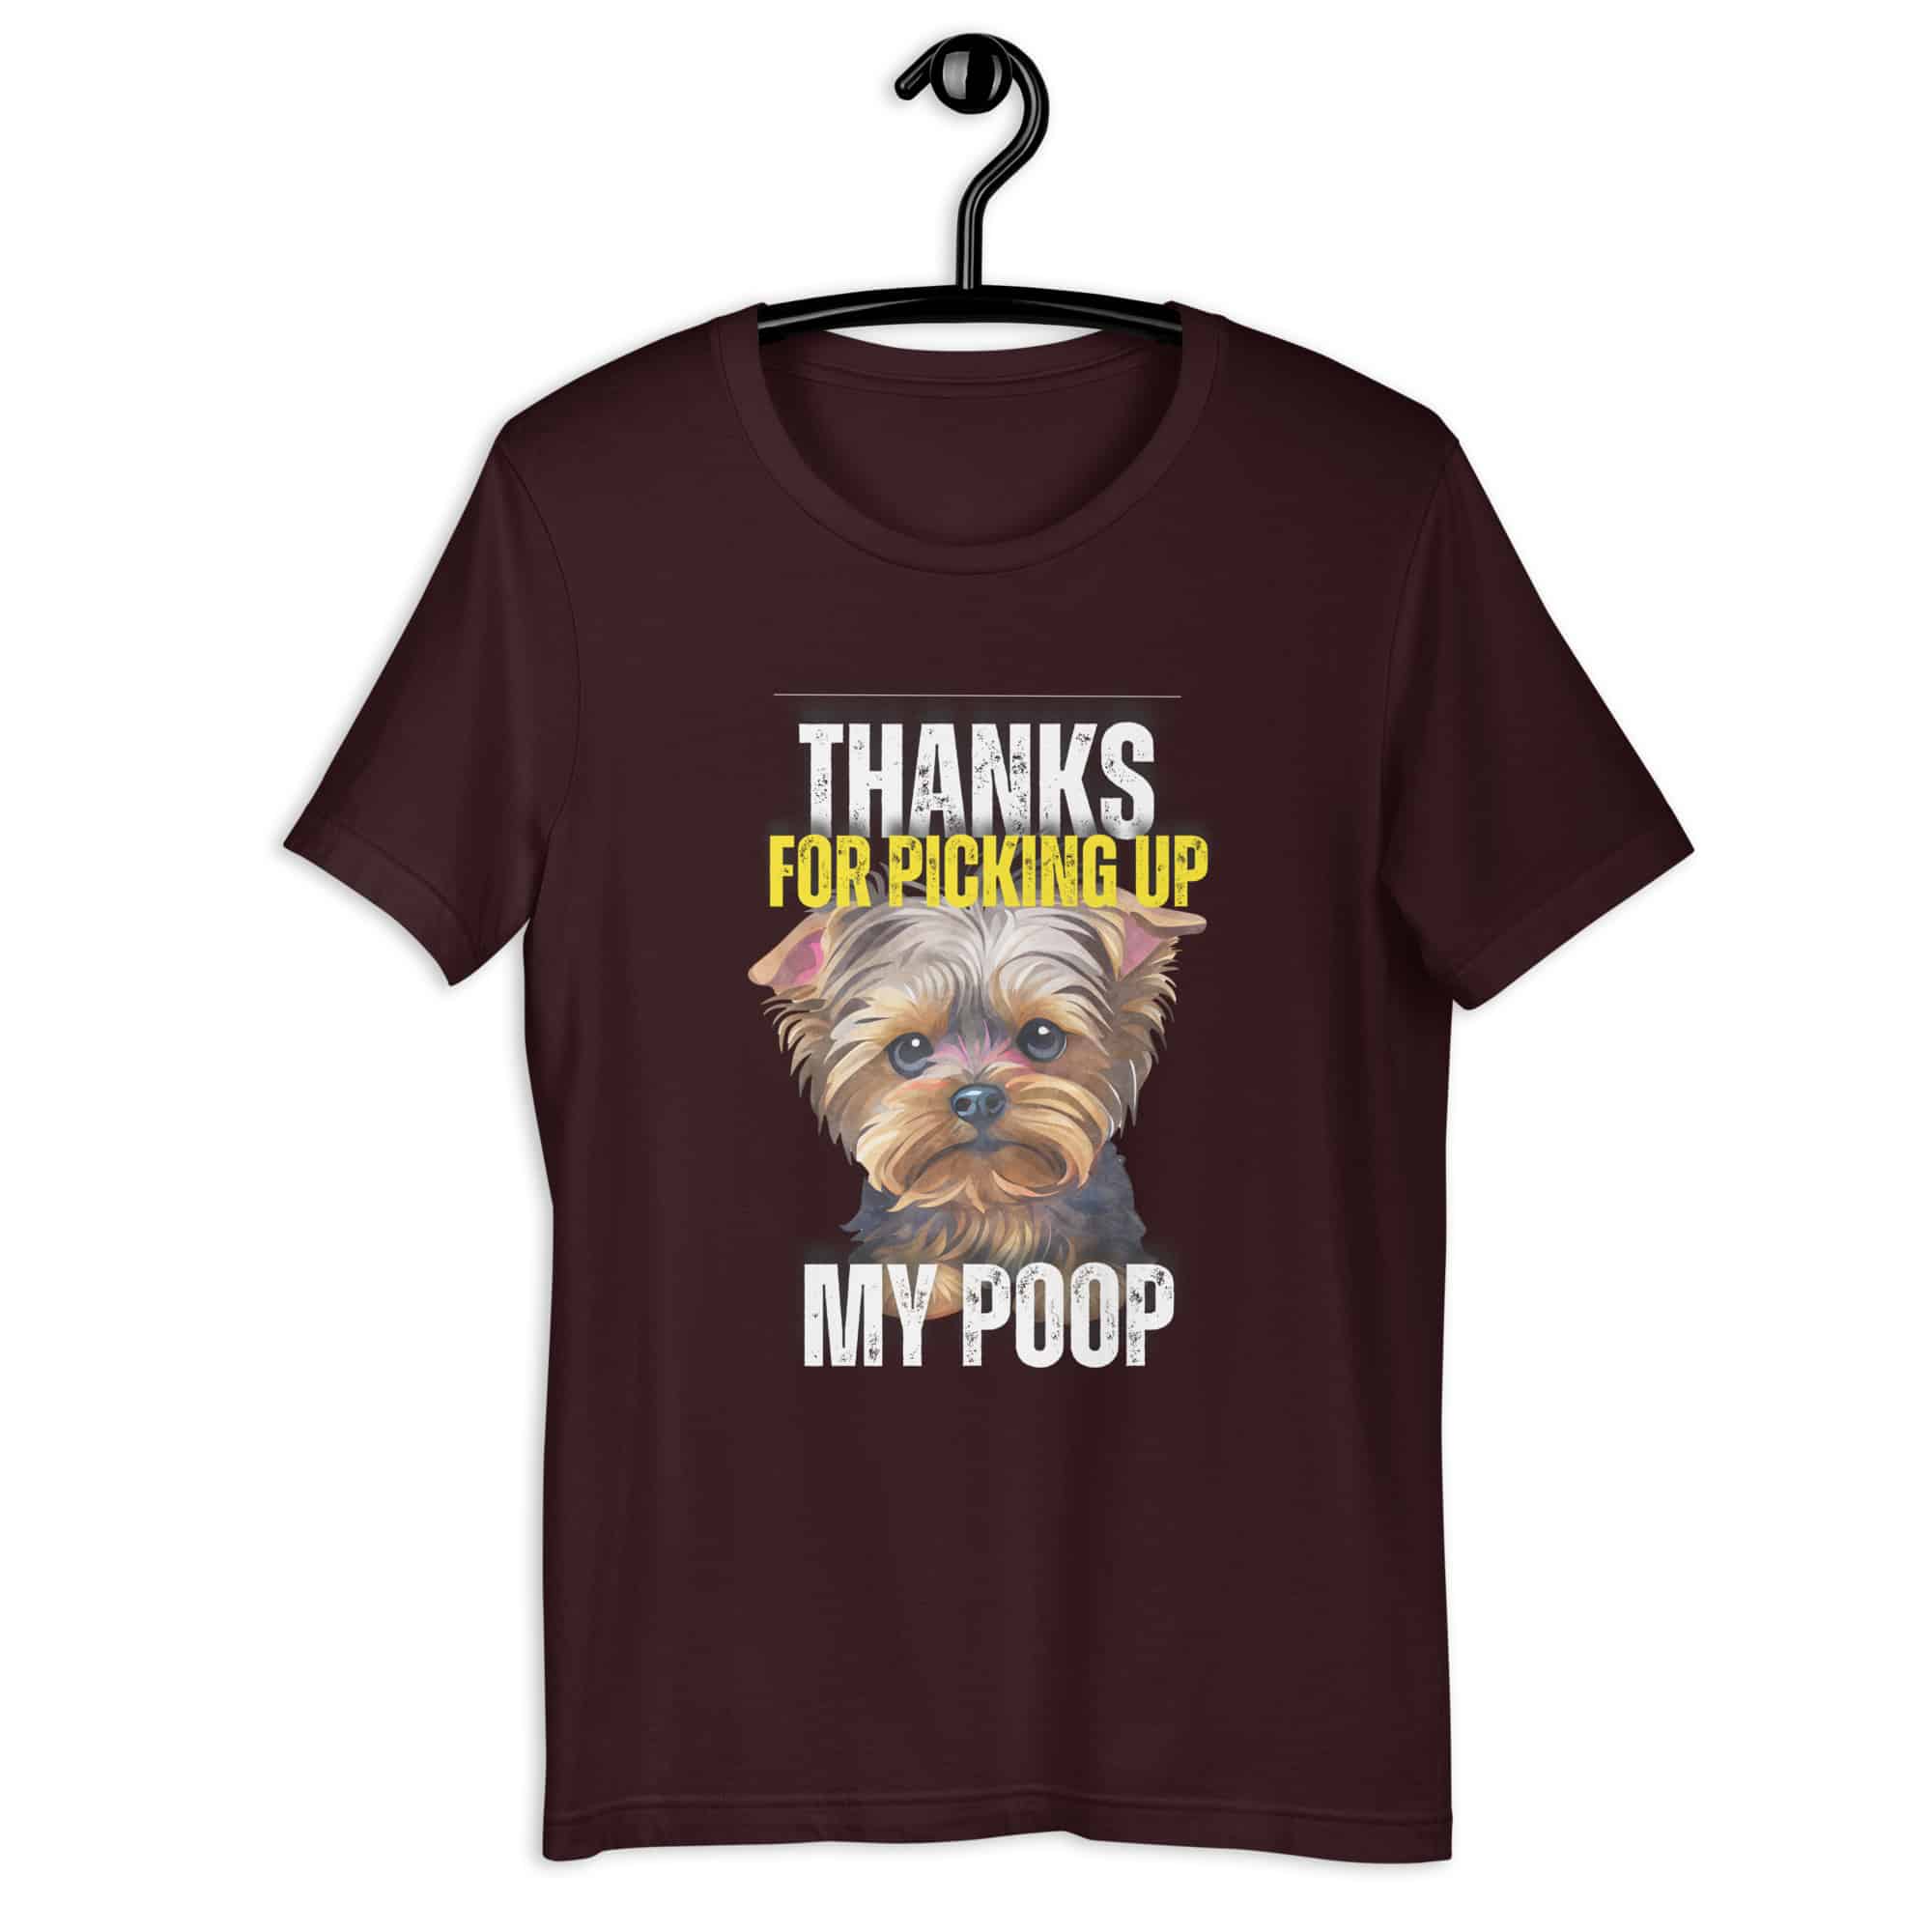 Thanks For Picking Up My POOP Funny Poodles Unisex T-Shirt. Oxblood Black